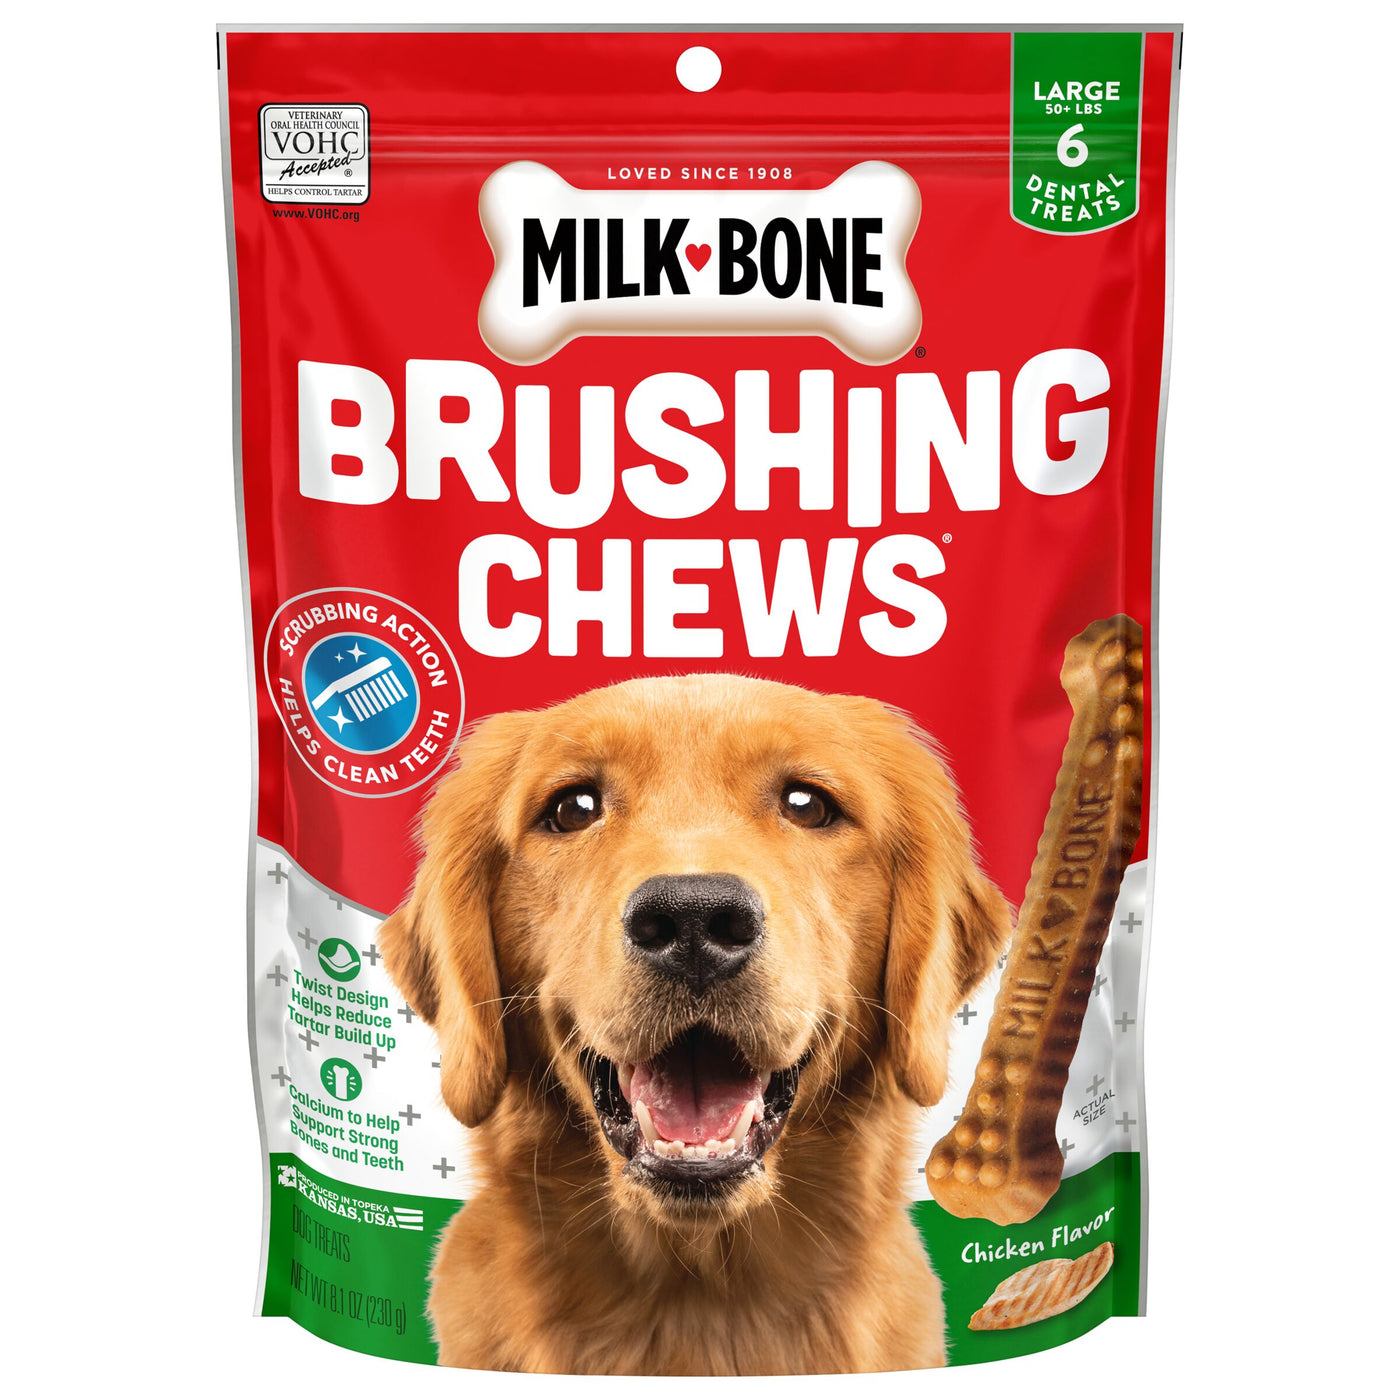 Milk-Bone Brushing Chews Daily Dental Dog Treats, Large, 6 Count